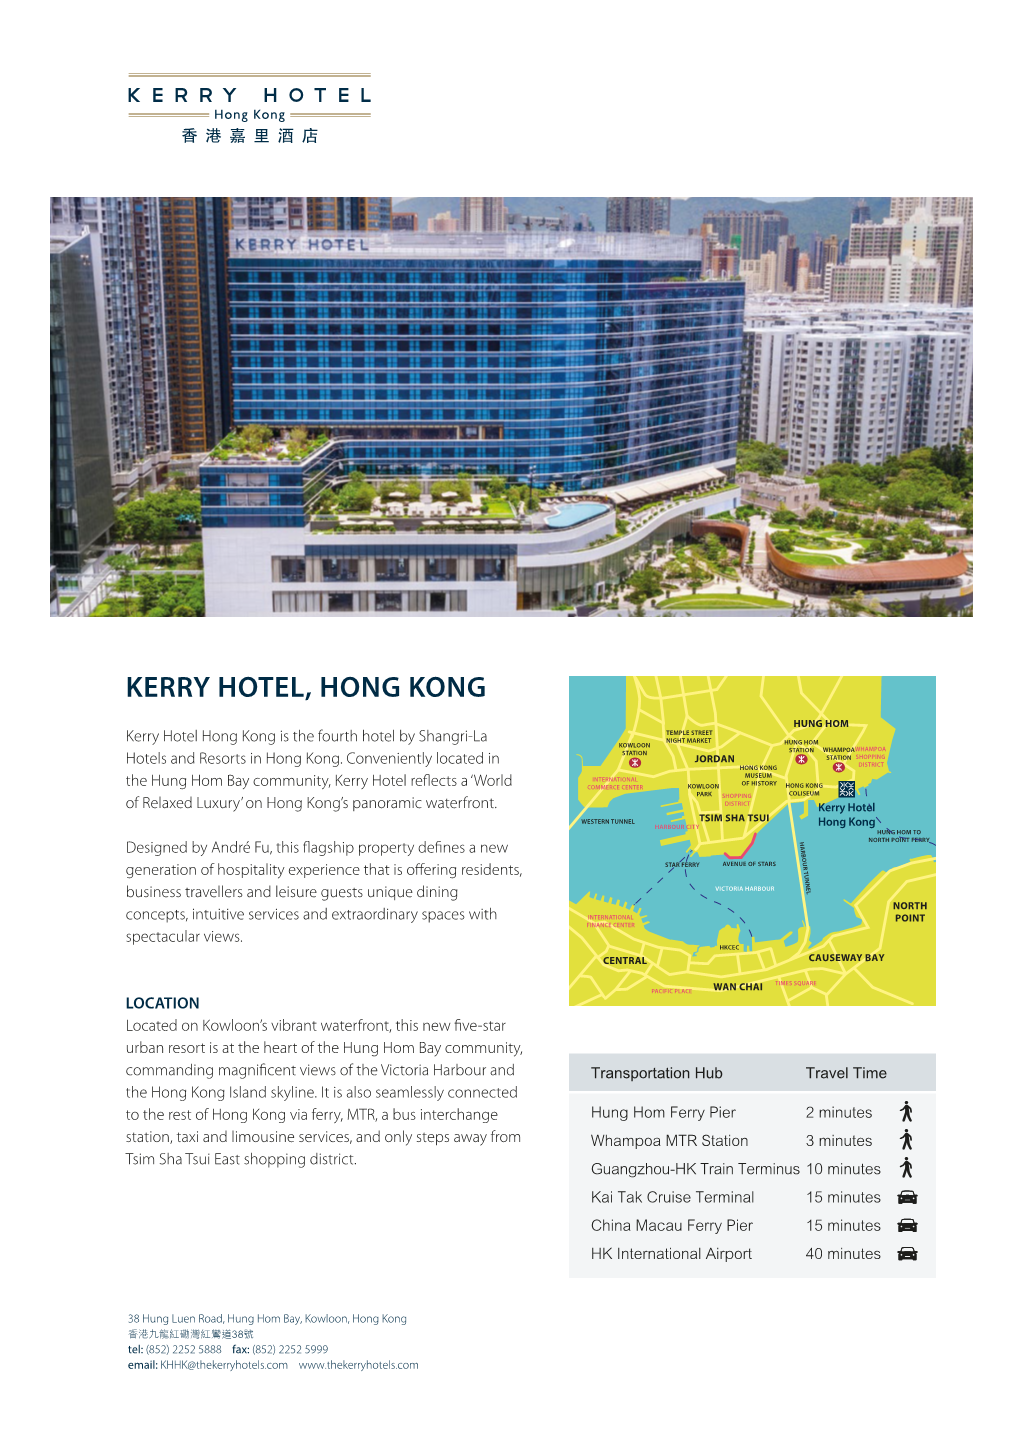 Kerry Hotel Factsheet